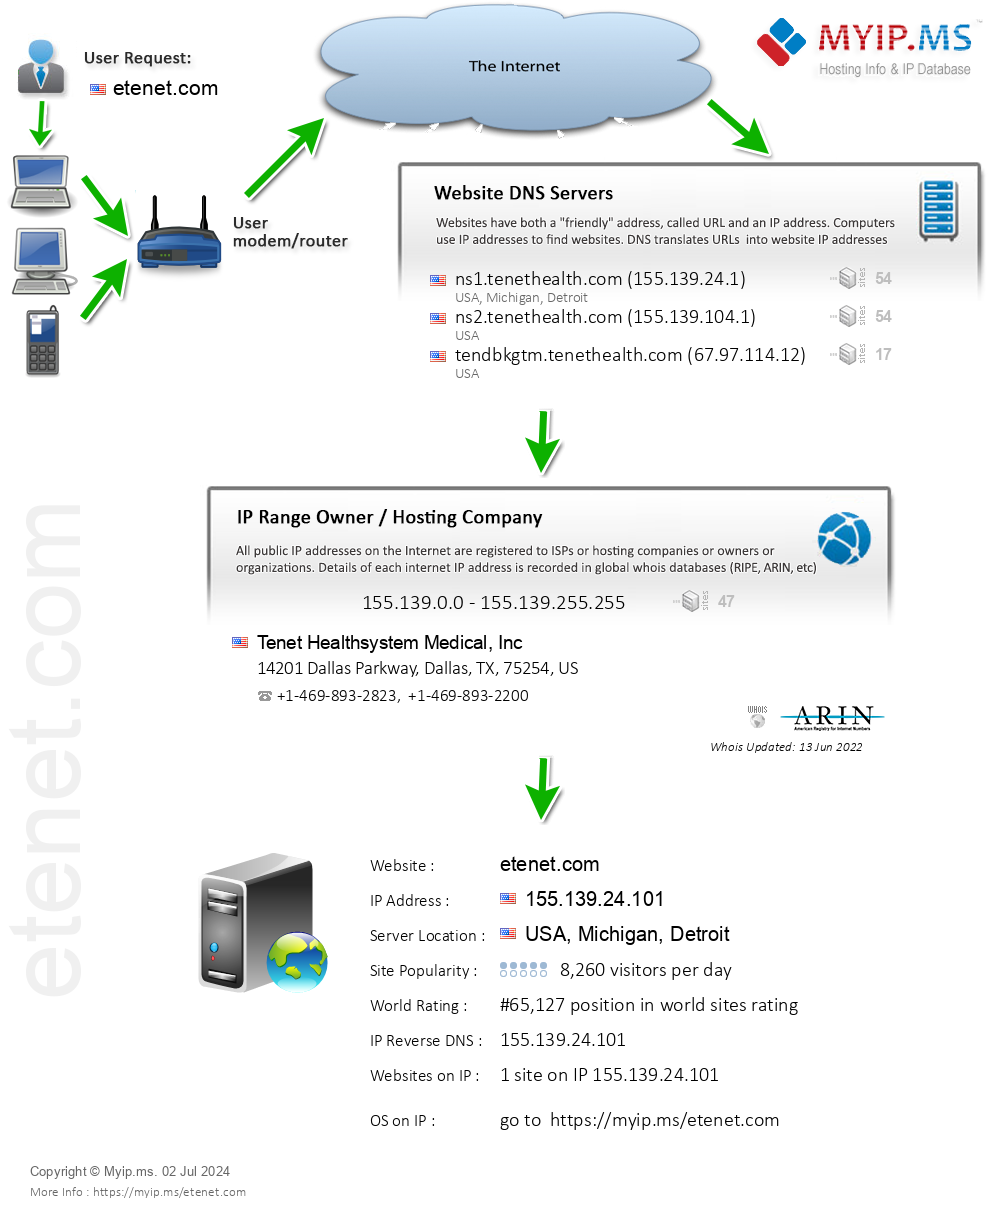 Etenet.com - Website Hosting Visual IP Diagram